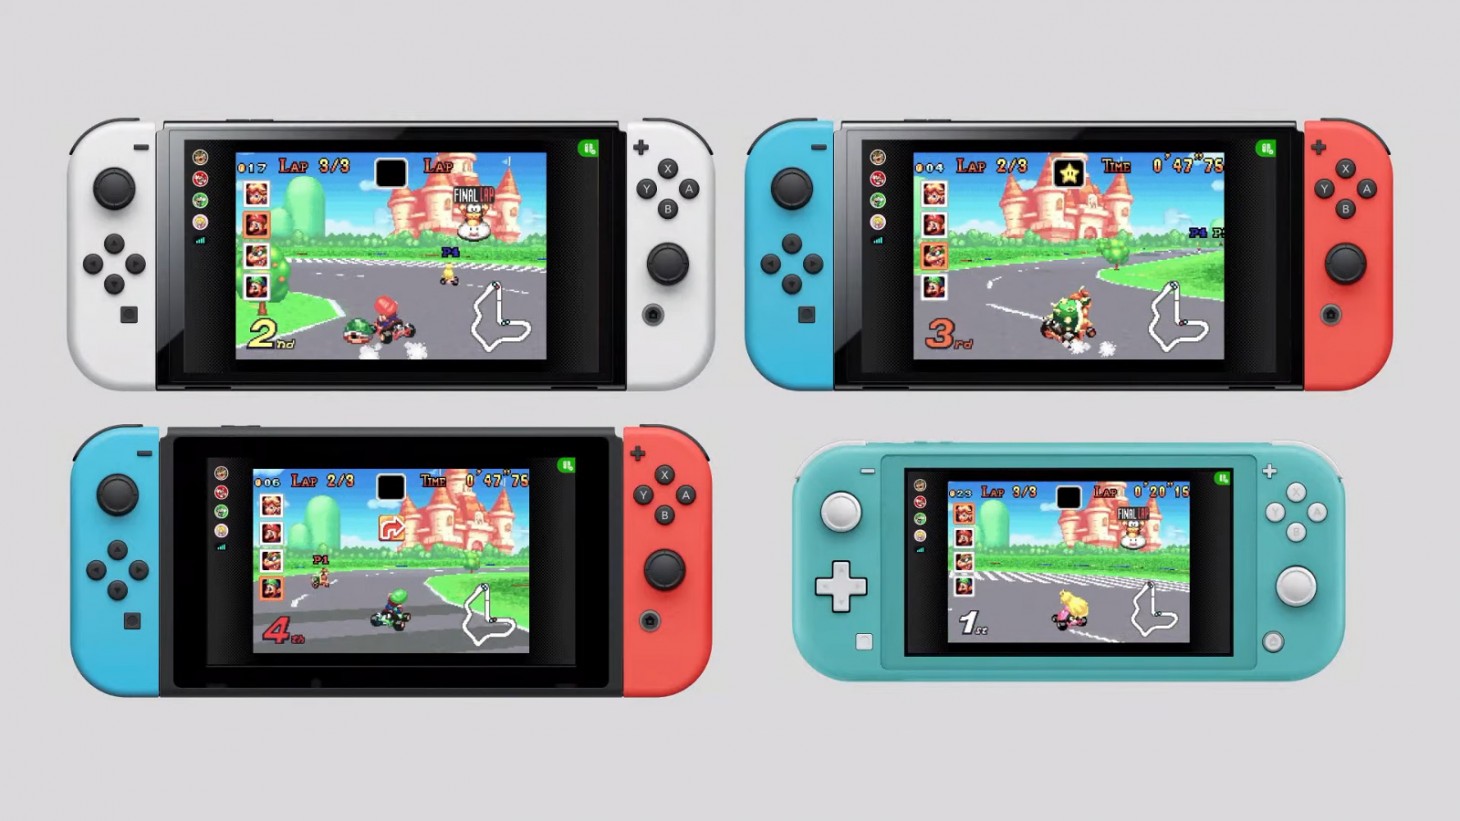 Nintendo News: Nintendo Switch Online Adds Game Boy Color Classics The  Legend of Zelda: Oracle of Ages and The Legend of Zelda: Oracle of Seasons